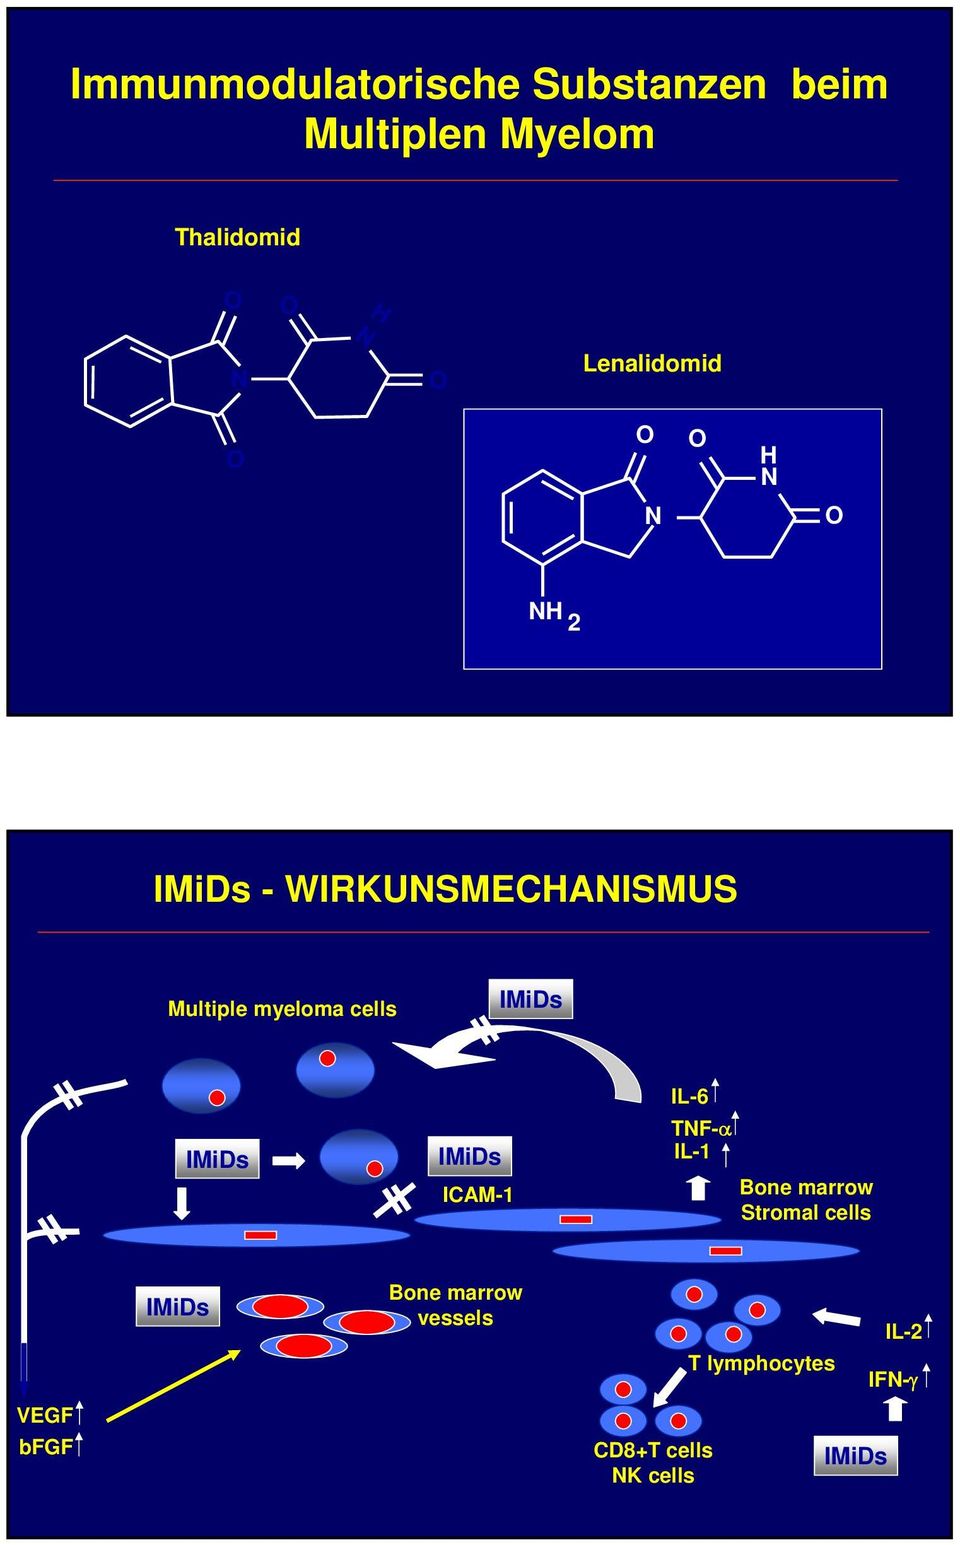 IMiDs IMiDs IMiDs ICAM-1 IL-6 TNF-α IL-1 Bone marrow Stromal cells IMiDs